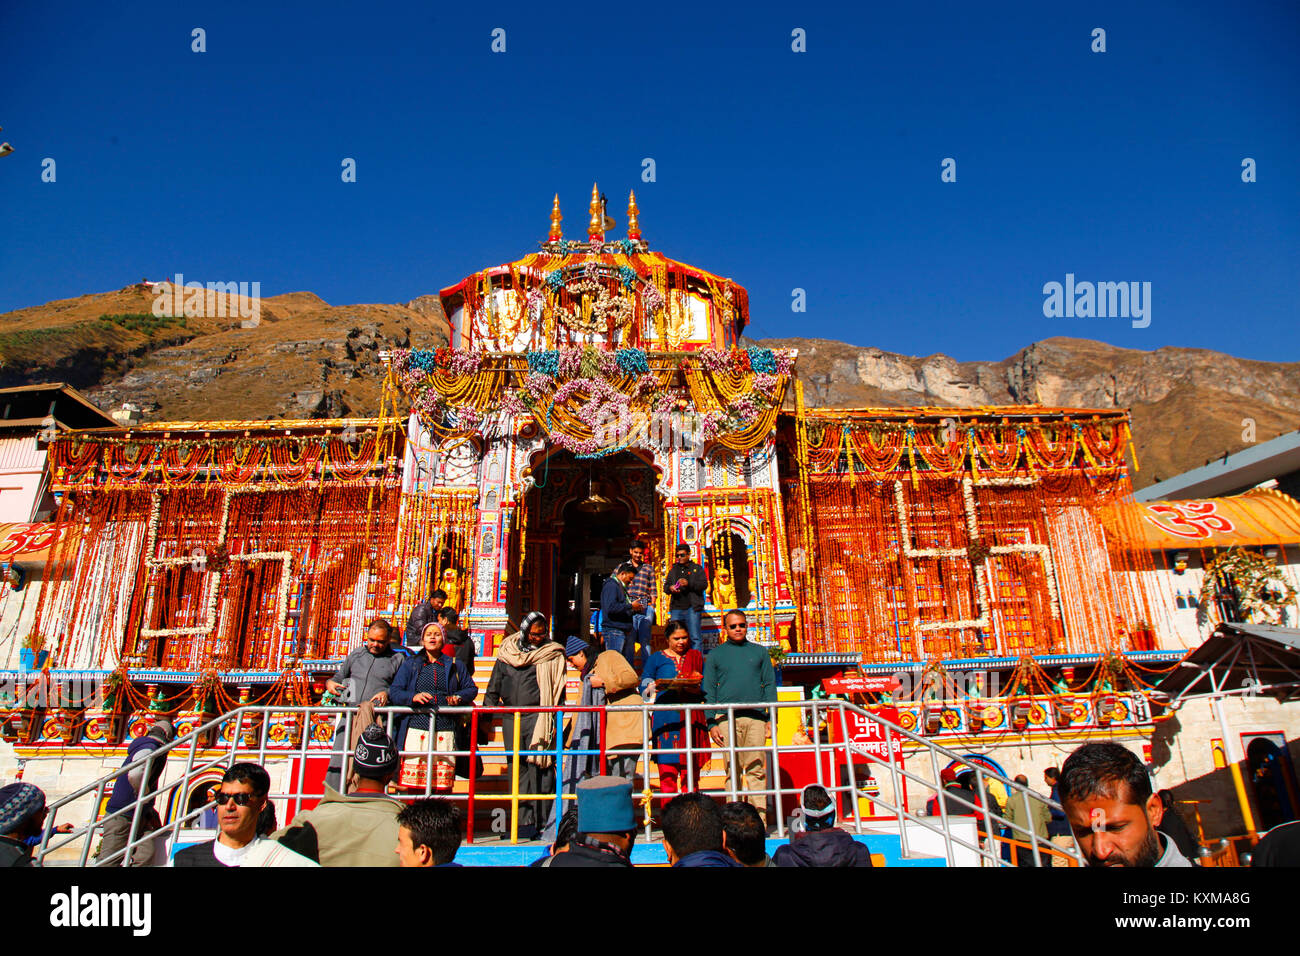 Lord Badrinath temple, Badrinath Dham, Badrinath Temple – Uttarakhand Trip Trek Himalaya, India (Photo Copyright © Saji Maramon) Stock Photo